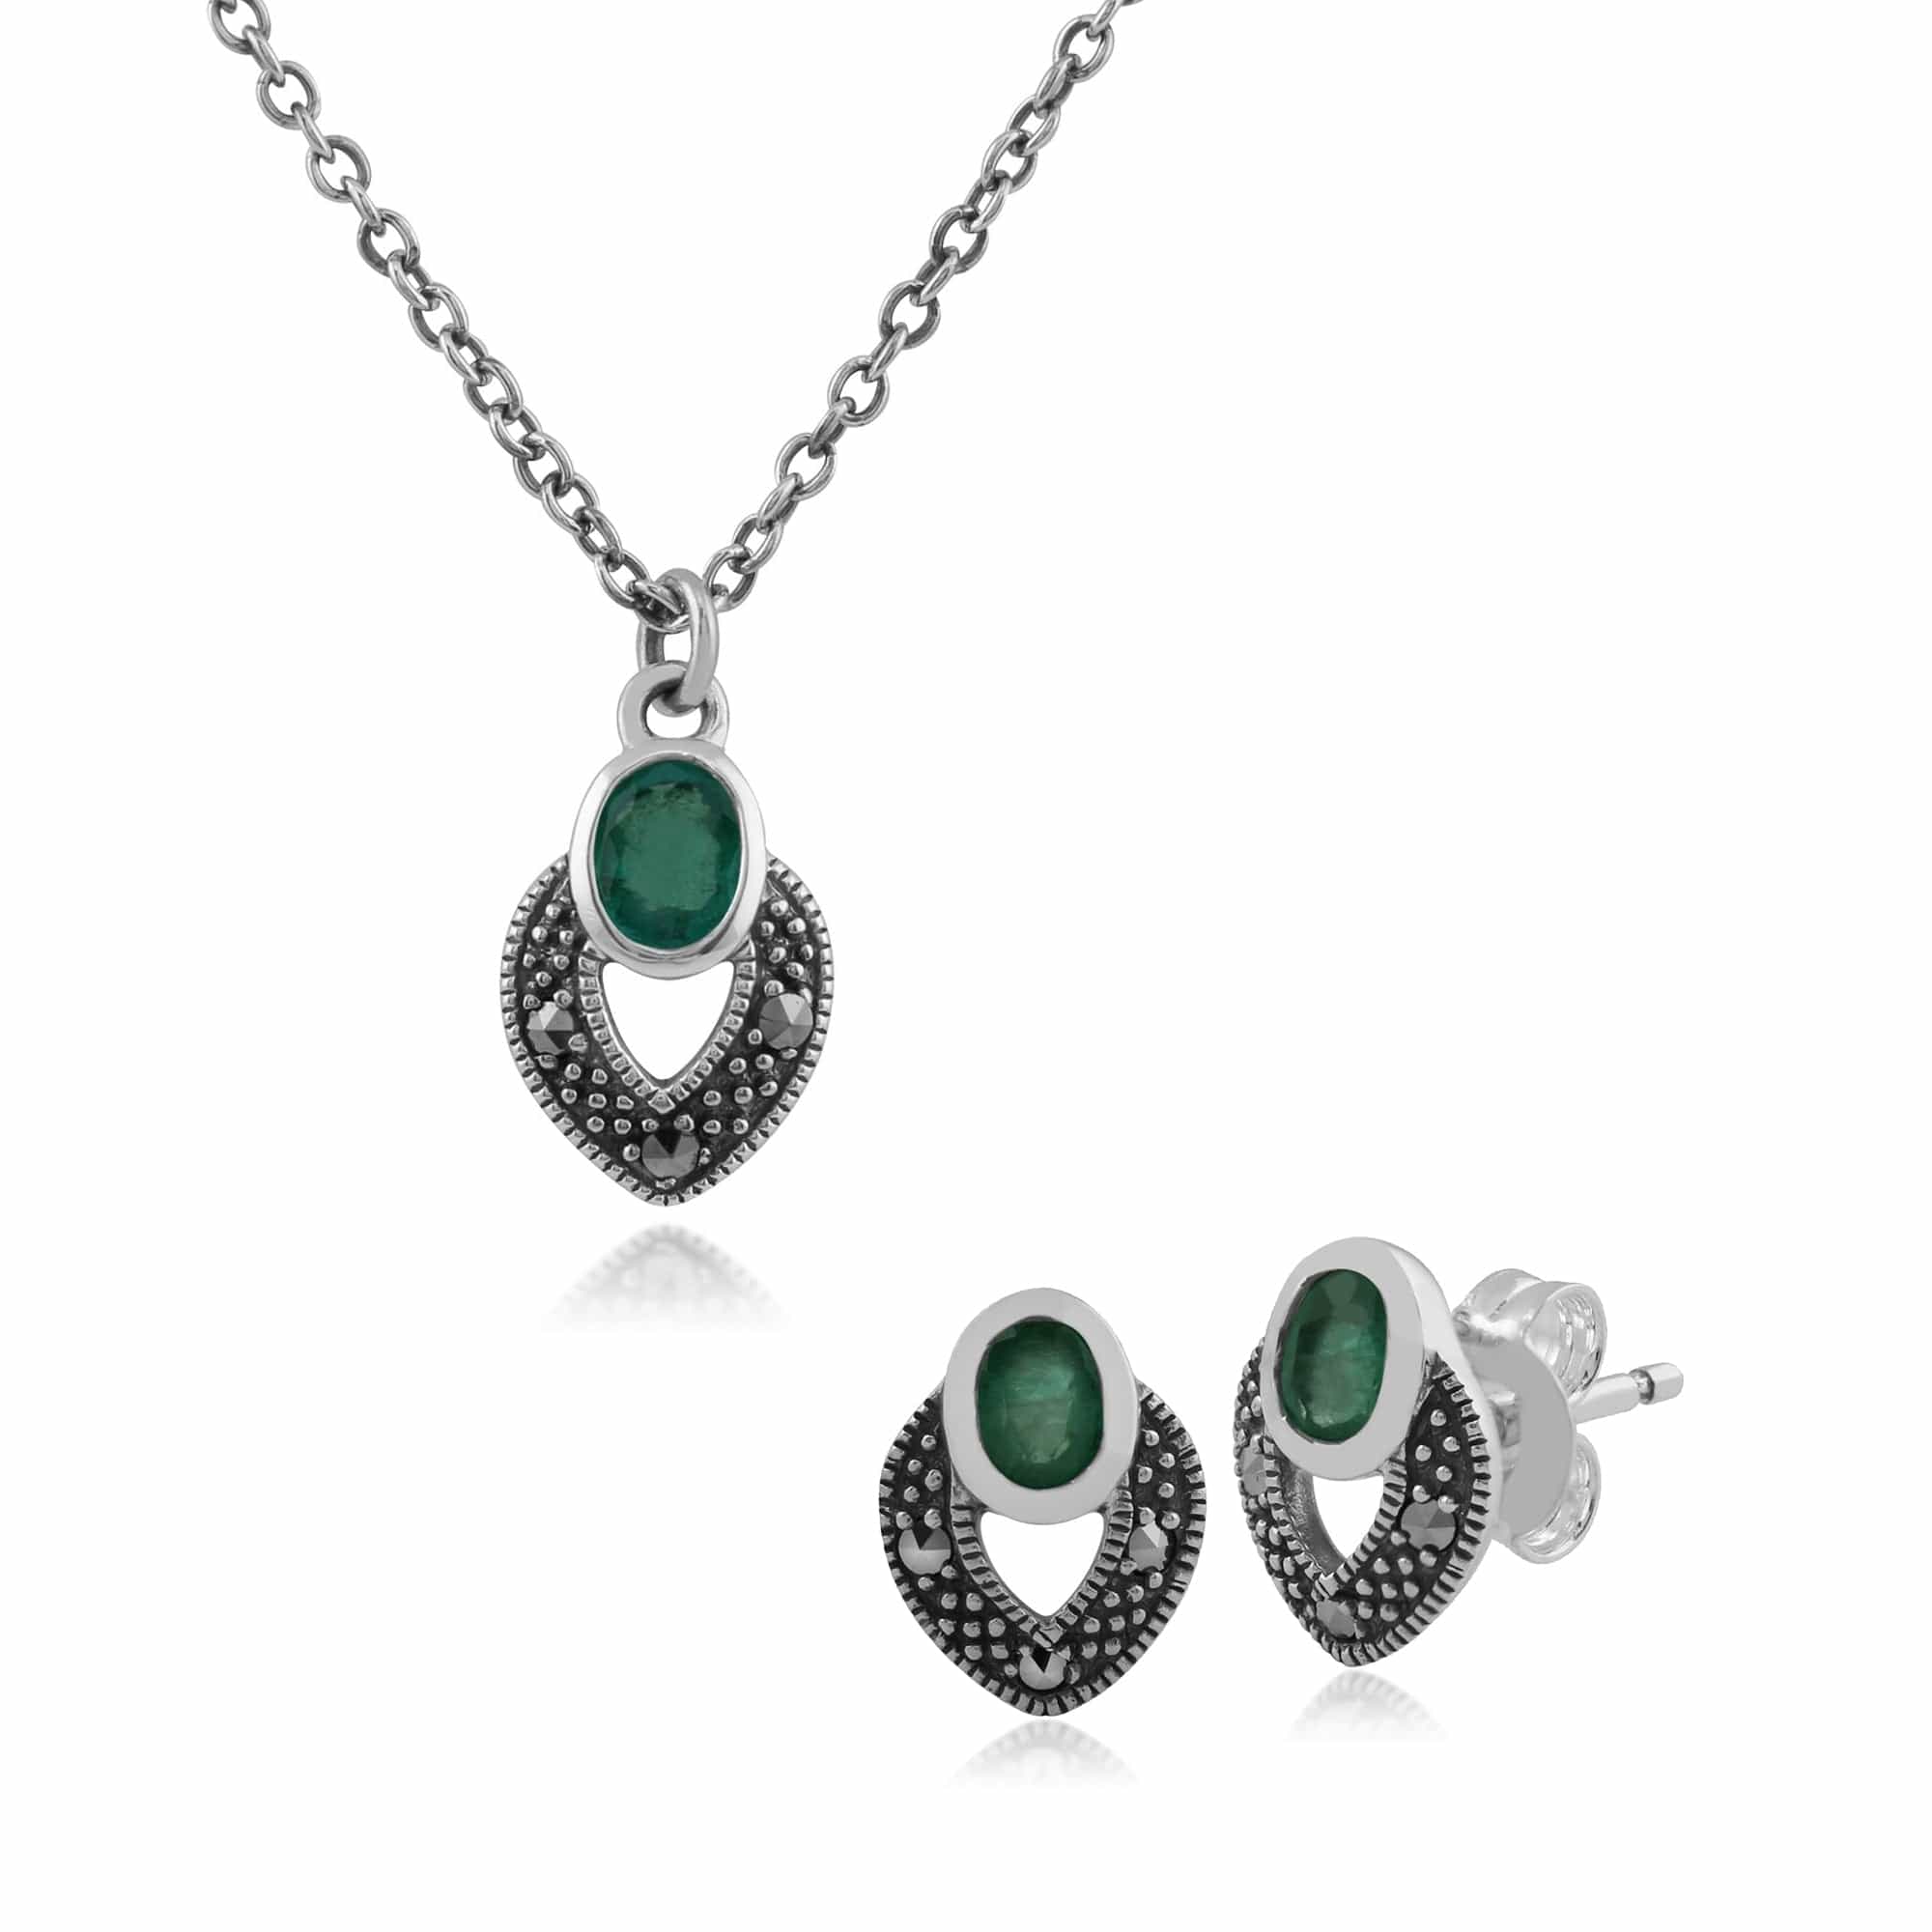 214E717808925-214N688210925 Art Deco Style Oval Emerald & Marcasite Stud Earrings & Pendant Set in Sterling Silver 1